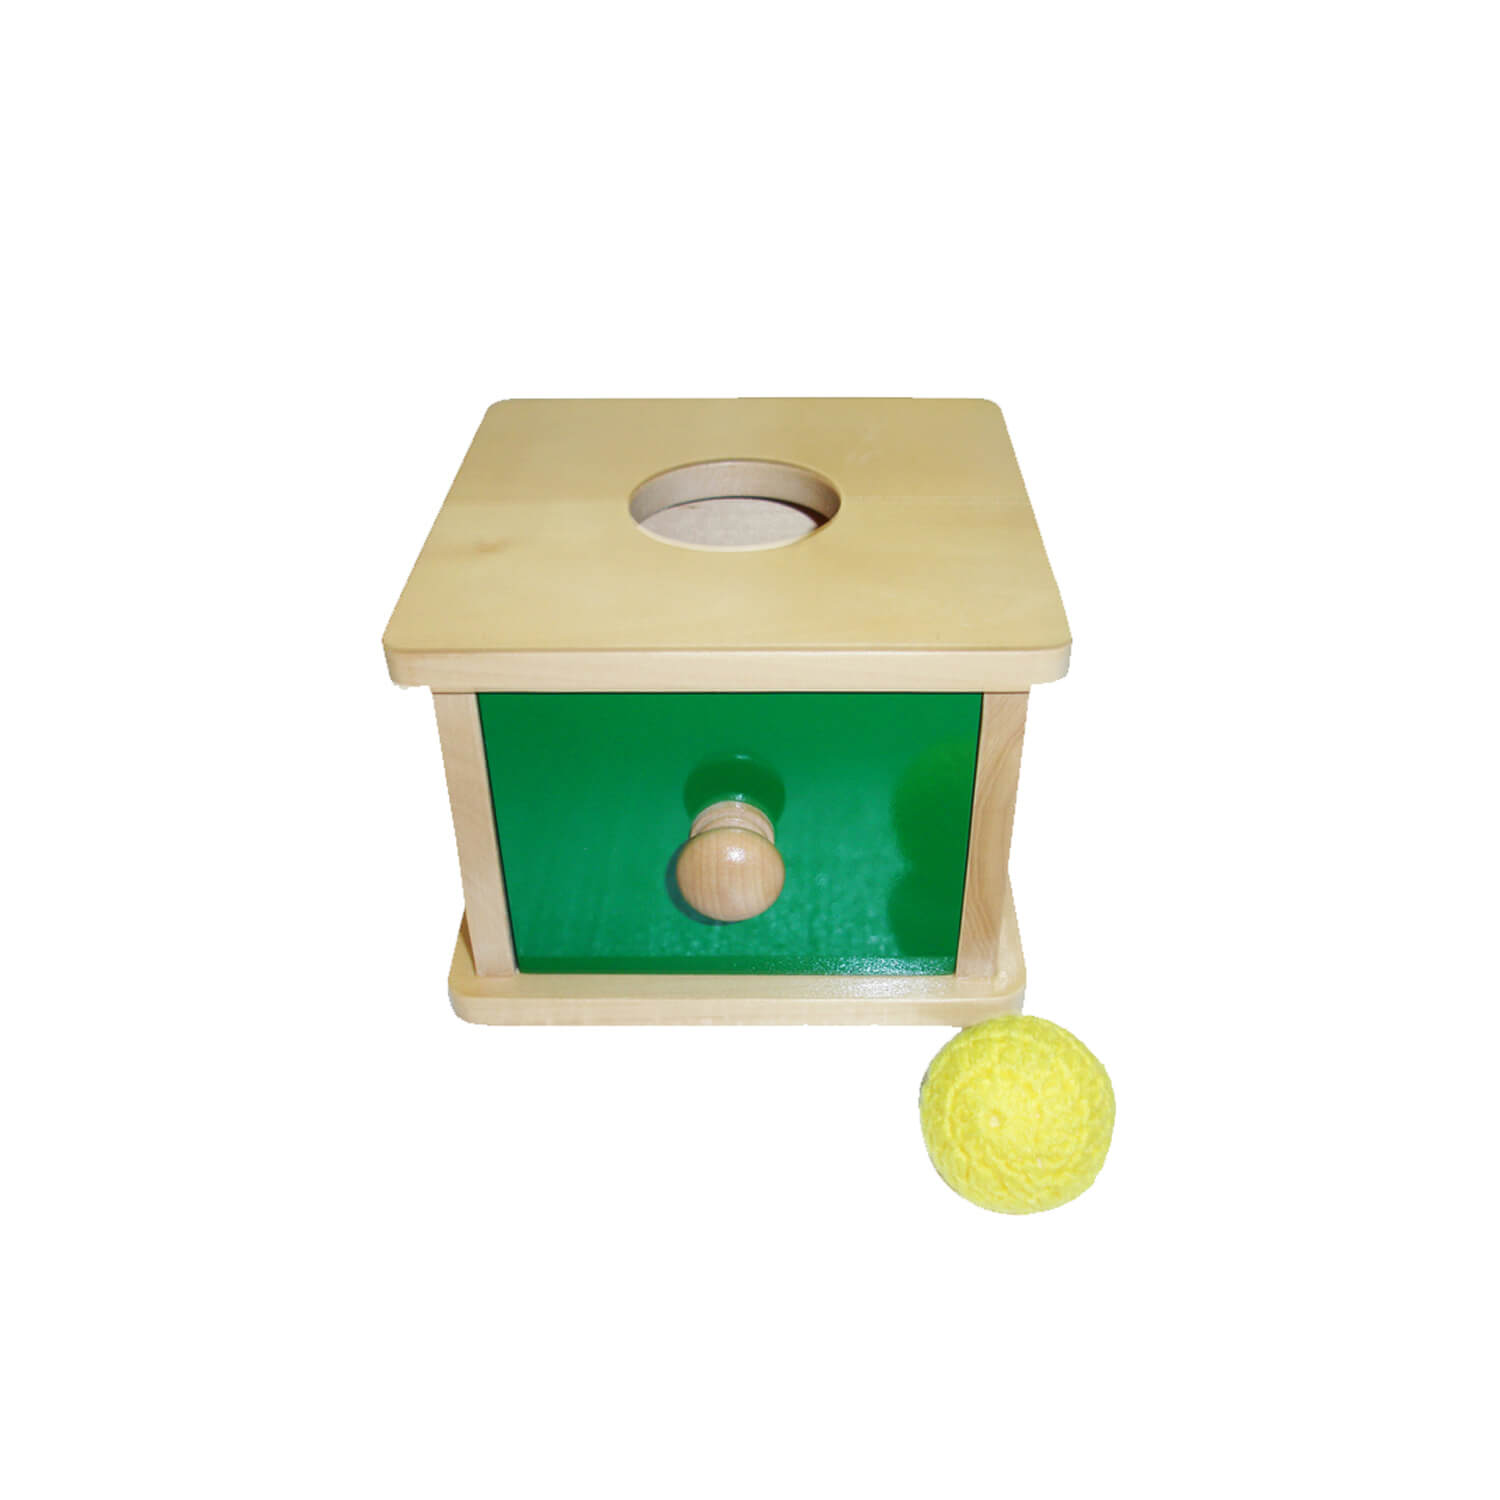 Imbucare Box With Ball